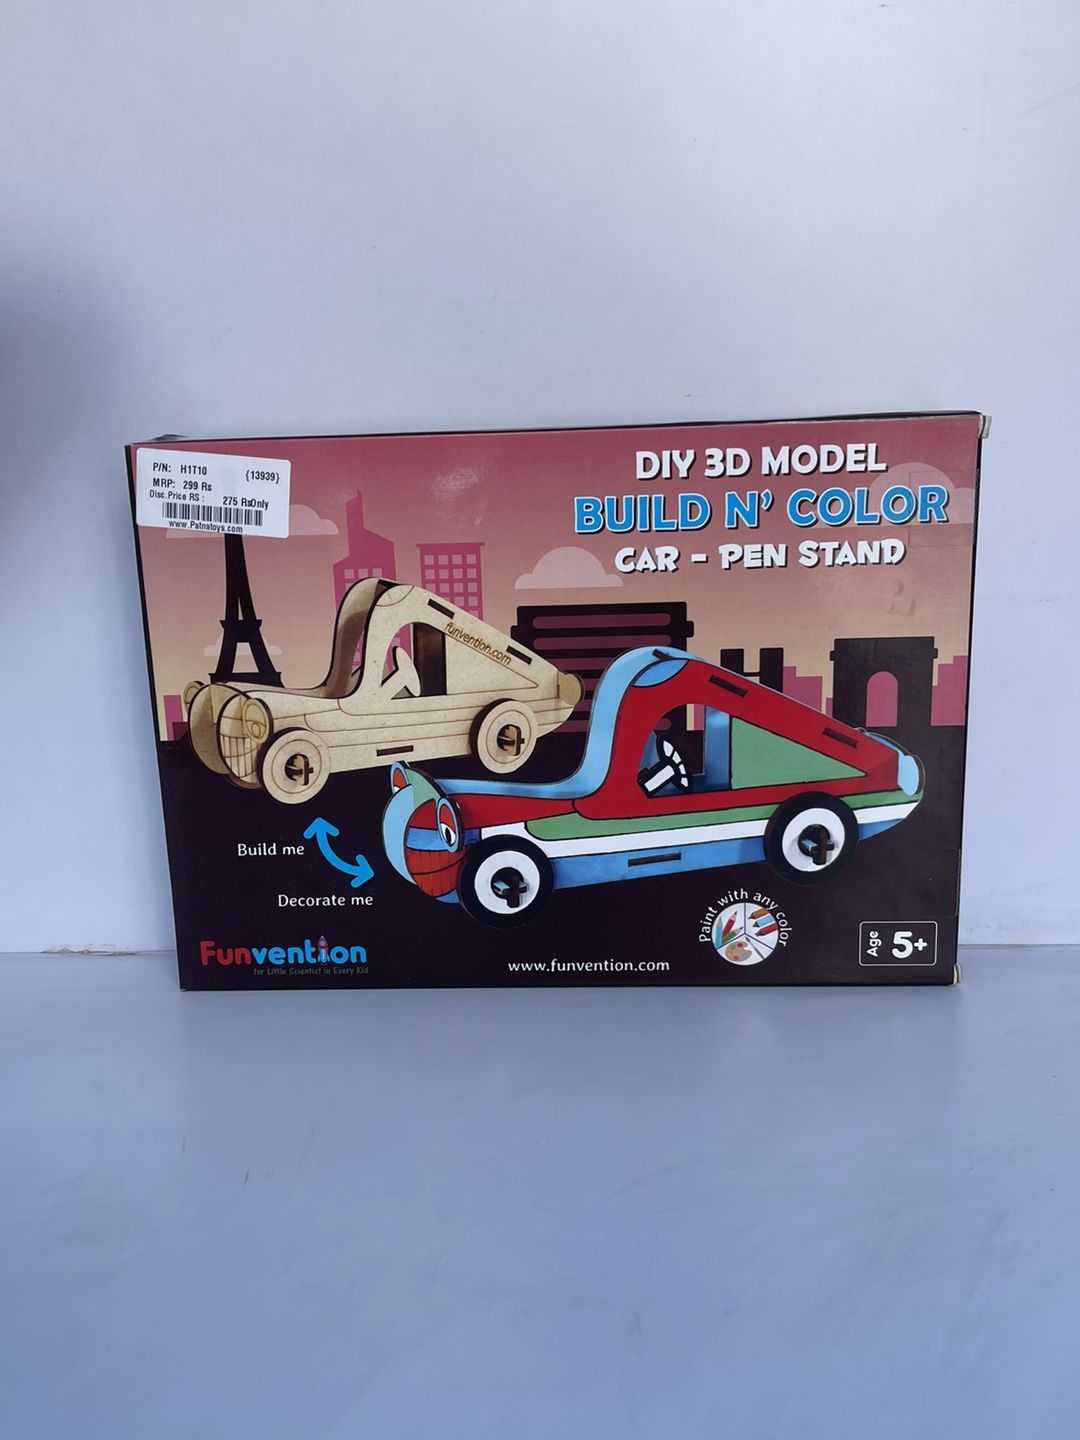 3D Model Build Color Car Pen Stand